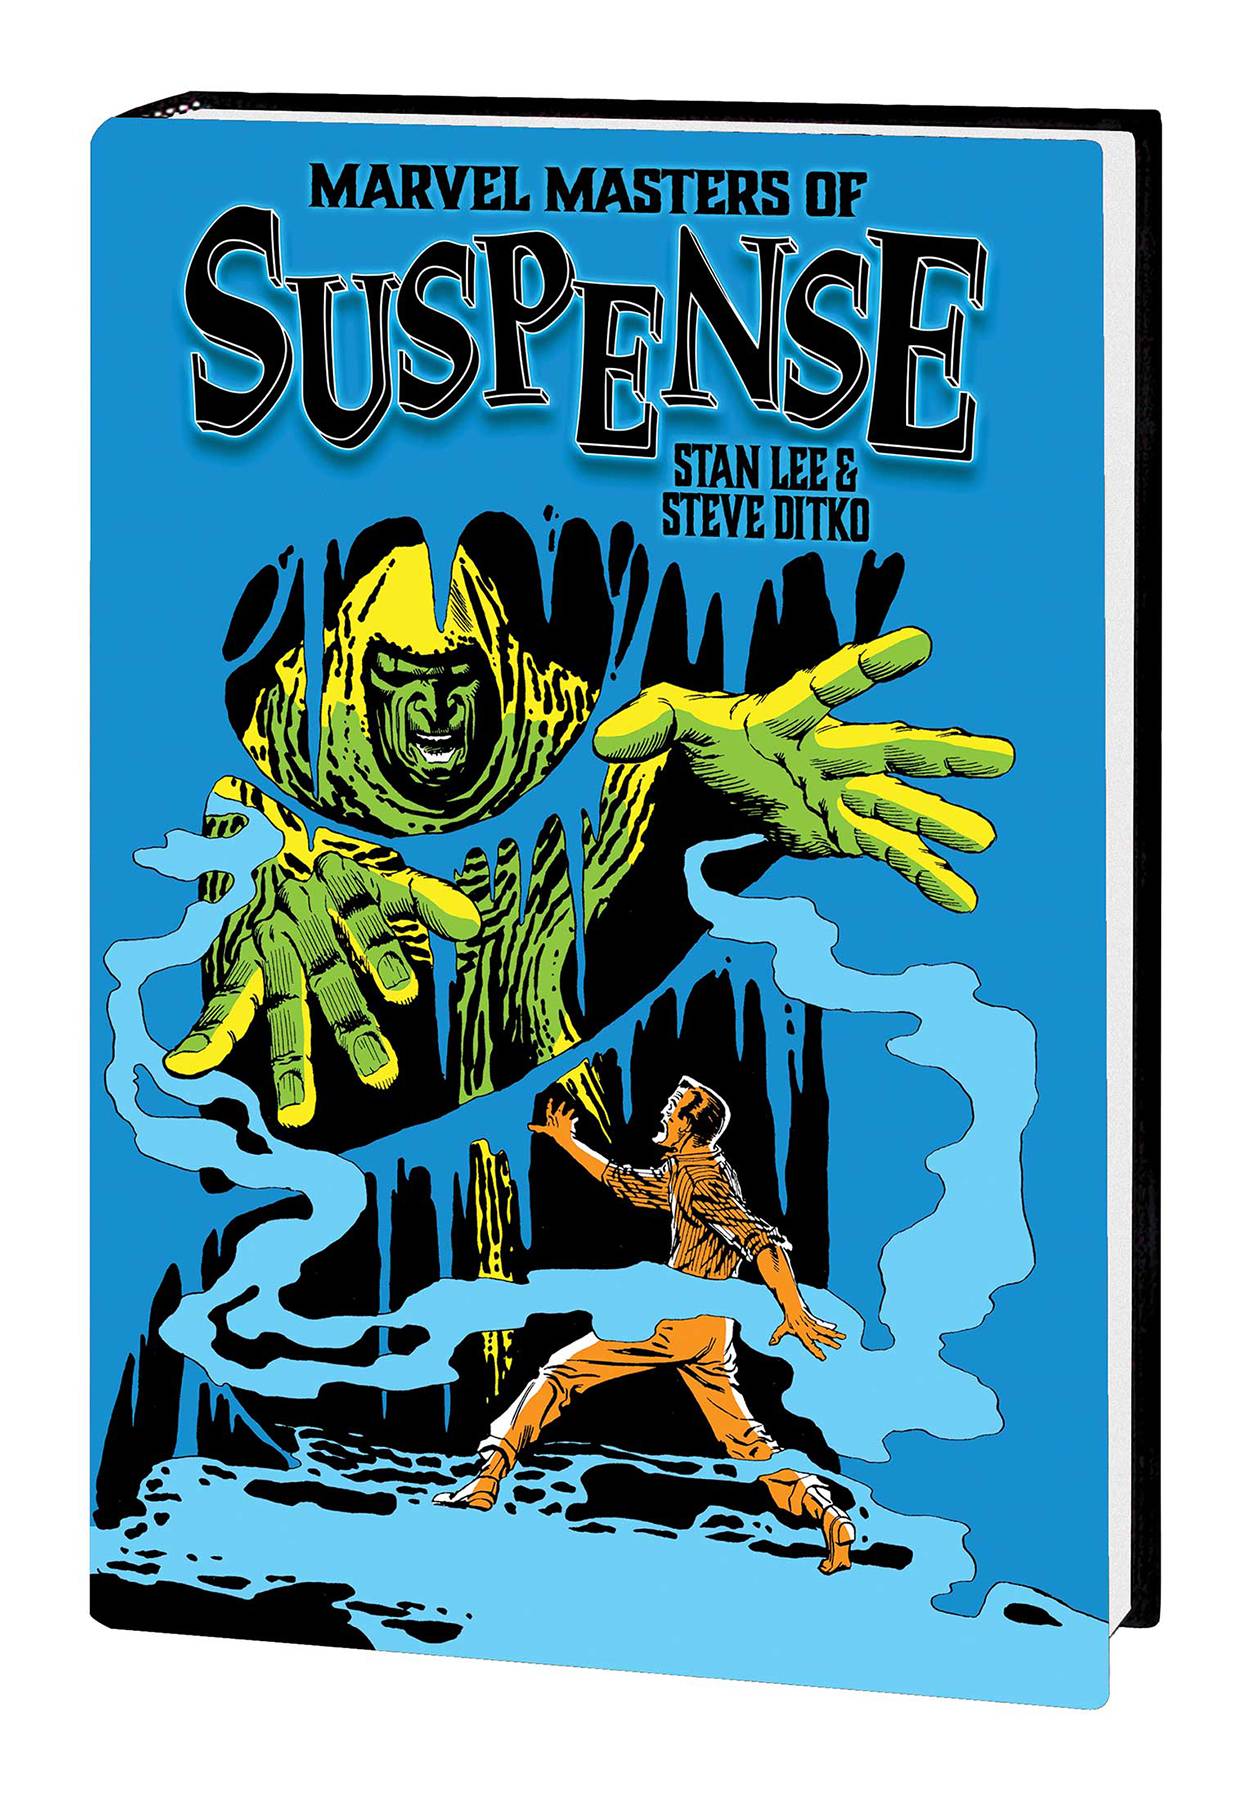 Marvel Masters of Suspense Stan Lee & Steve Ditko Hard Cover Omnibus Volume 1